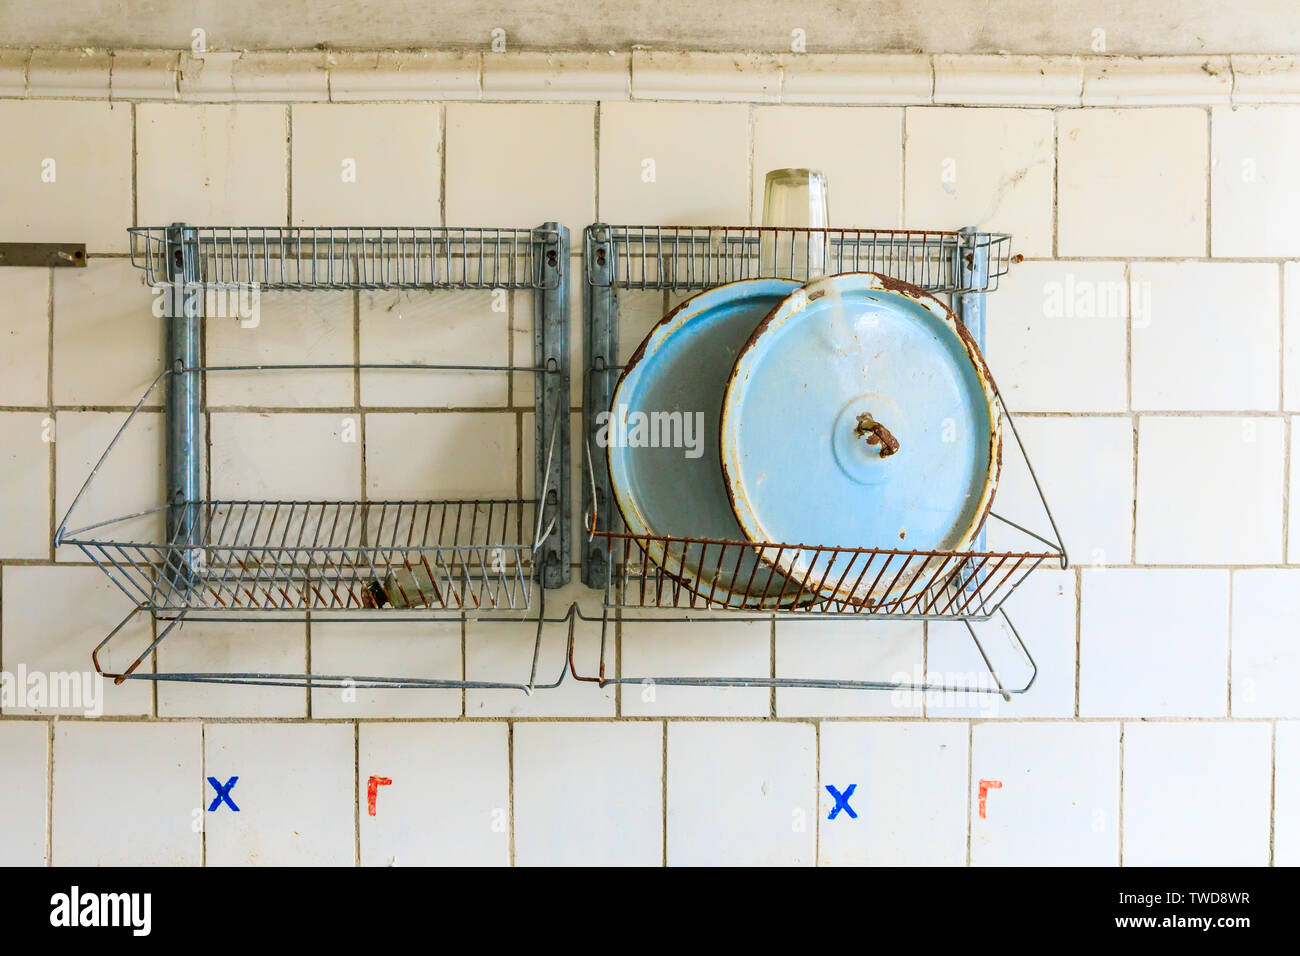 Eastern Europe, Ukraine, Pripyat, Chernobyl. The Hospital MsCh-126 (medical-sanitary unit). Pot lids on a wall rack in the kitchen. Stock Photo